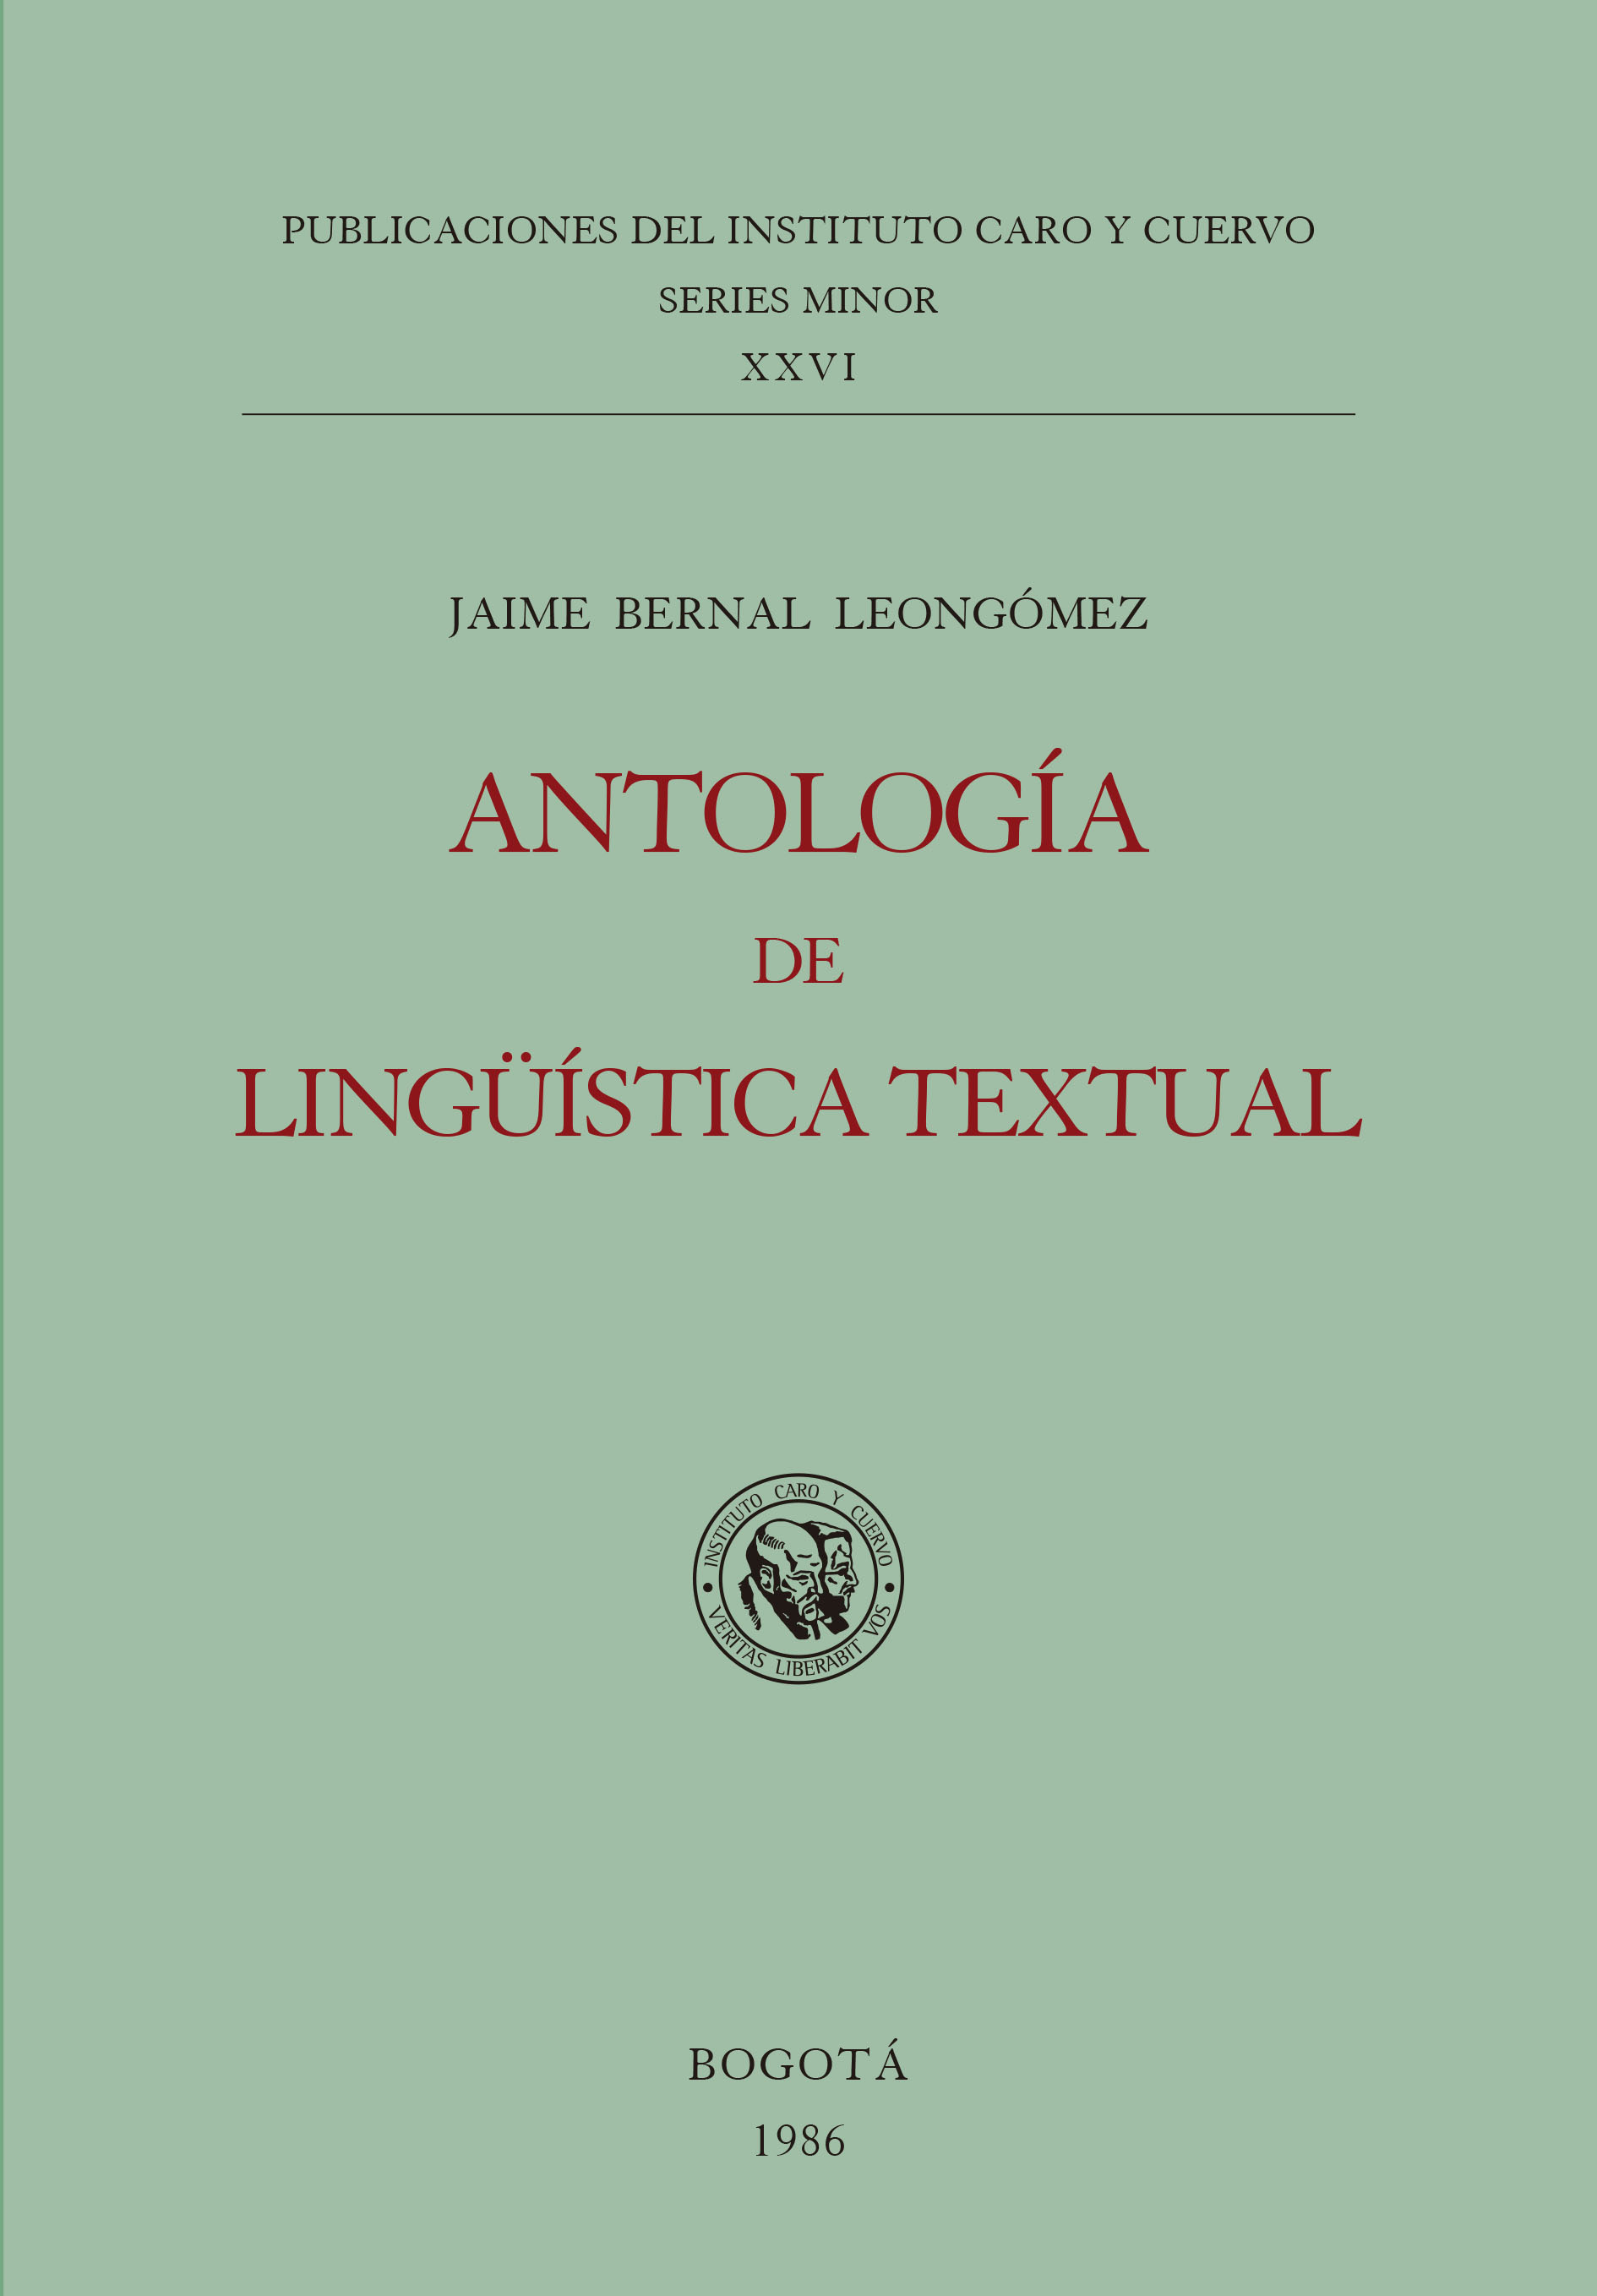 Antología de lingüística textual